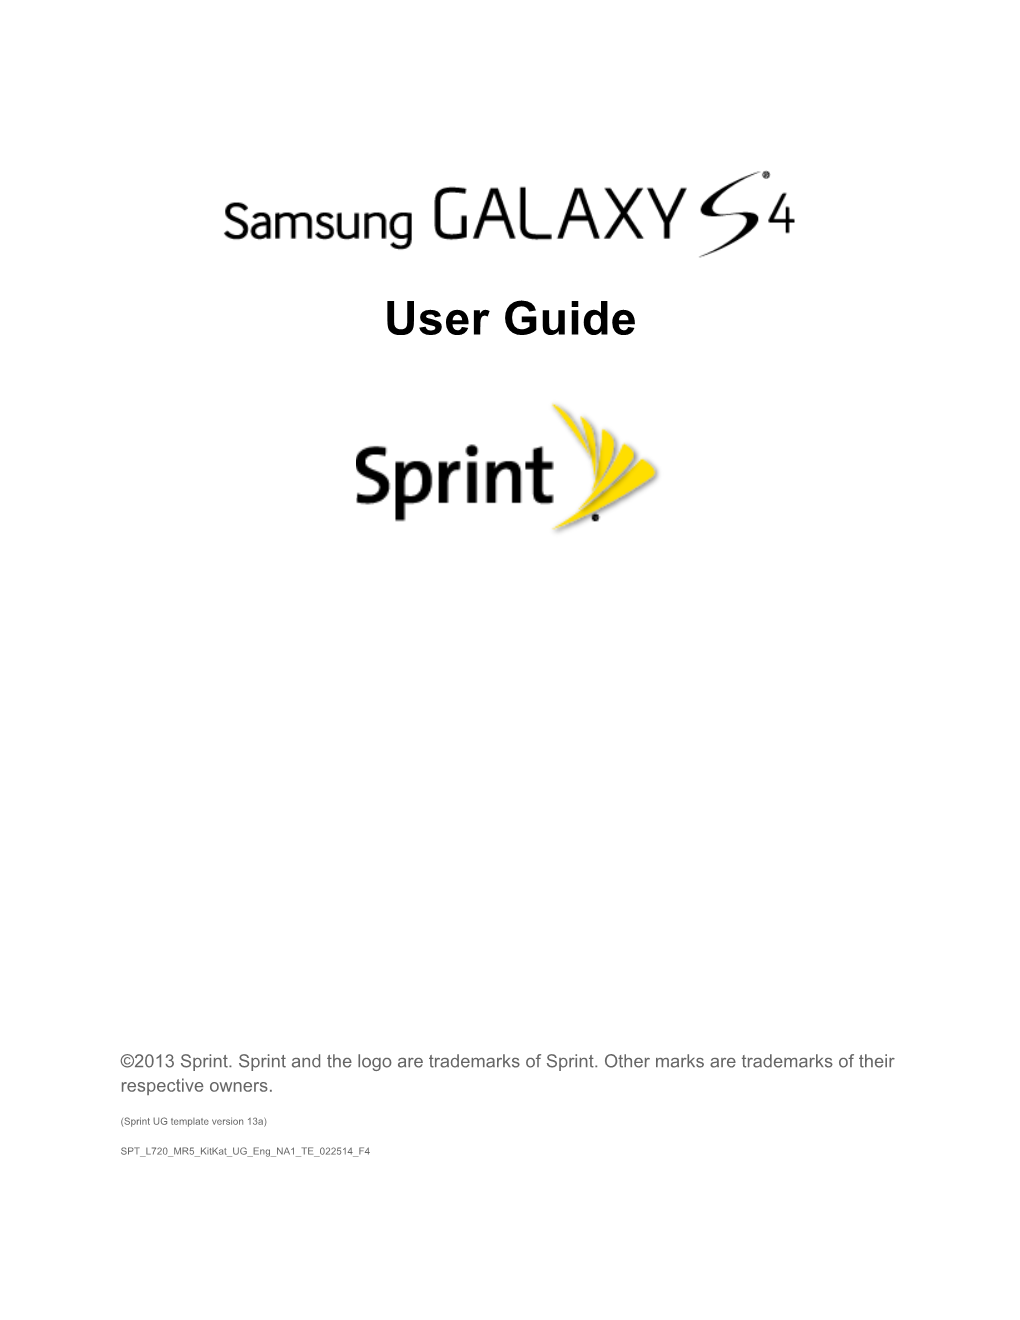 Samsung GALAXY S4 User Guide